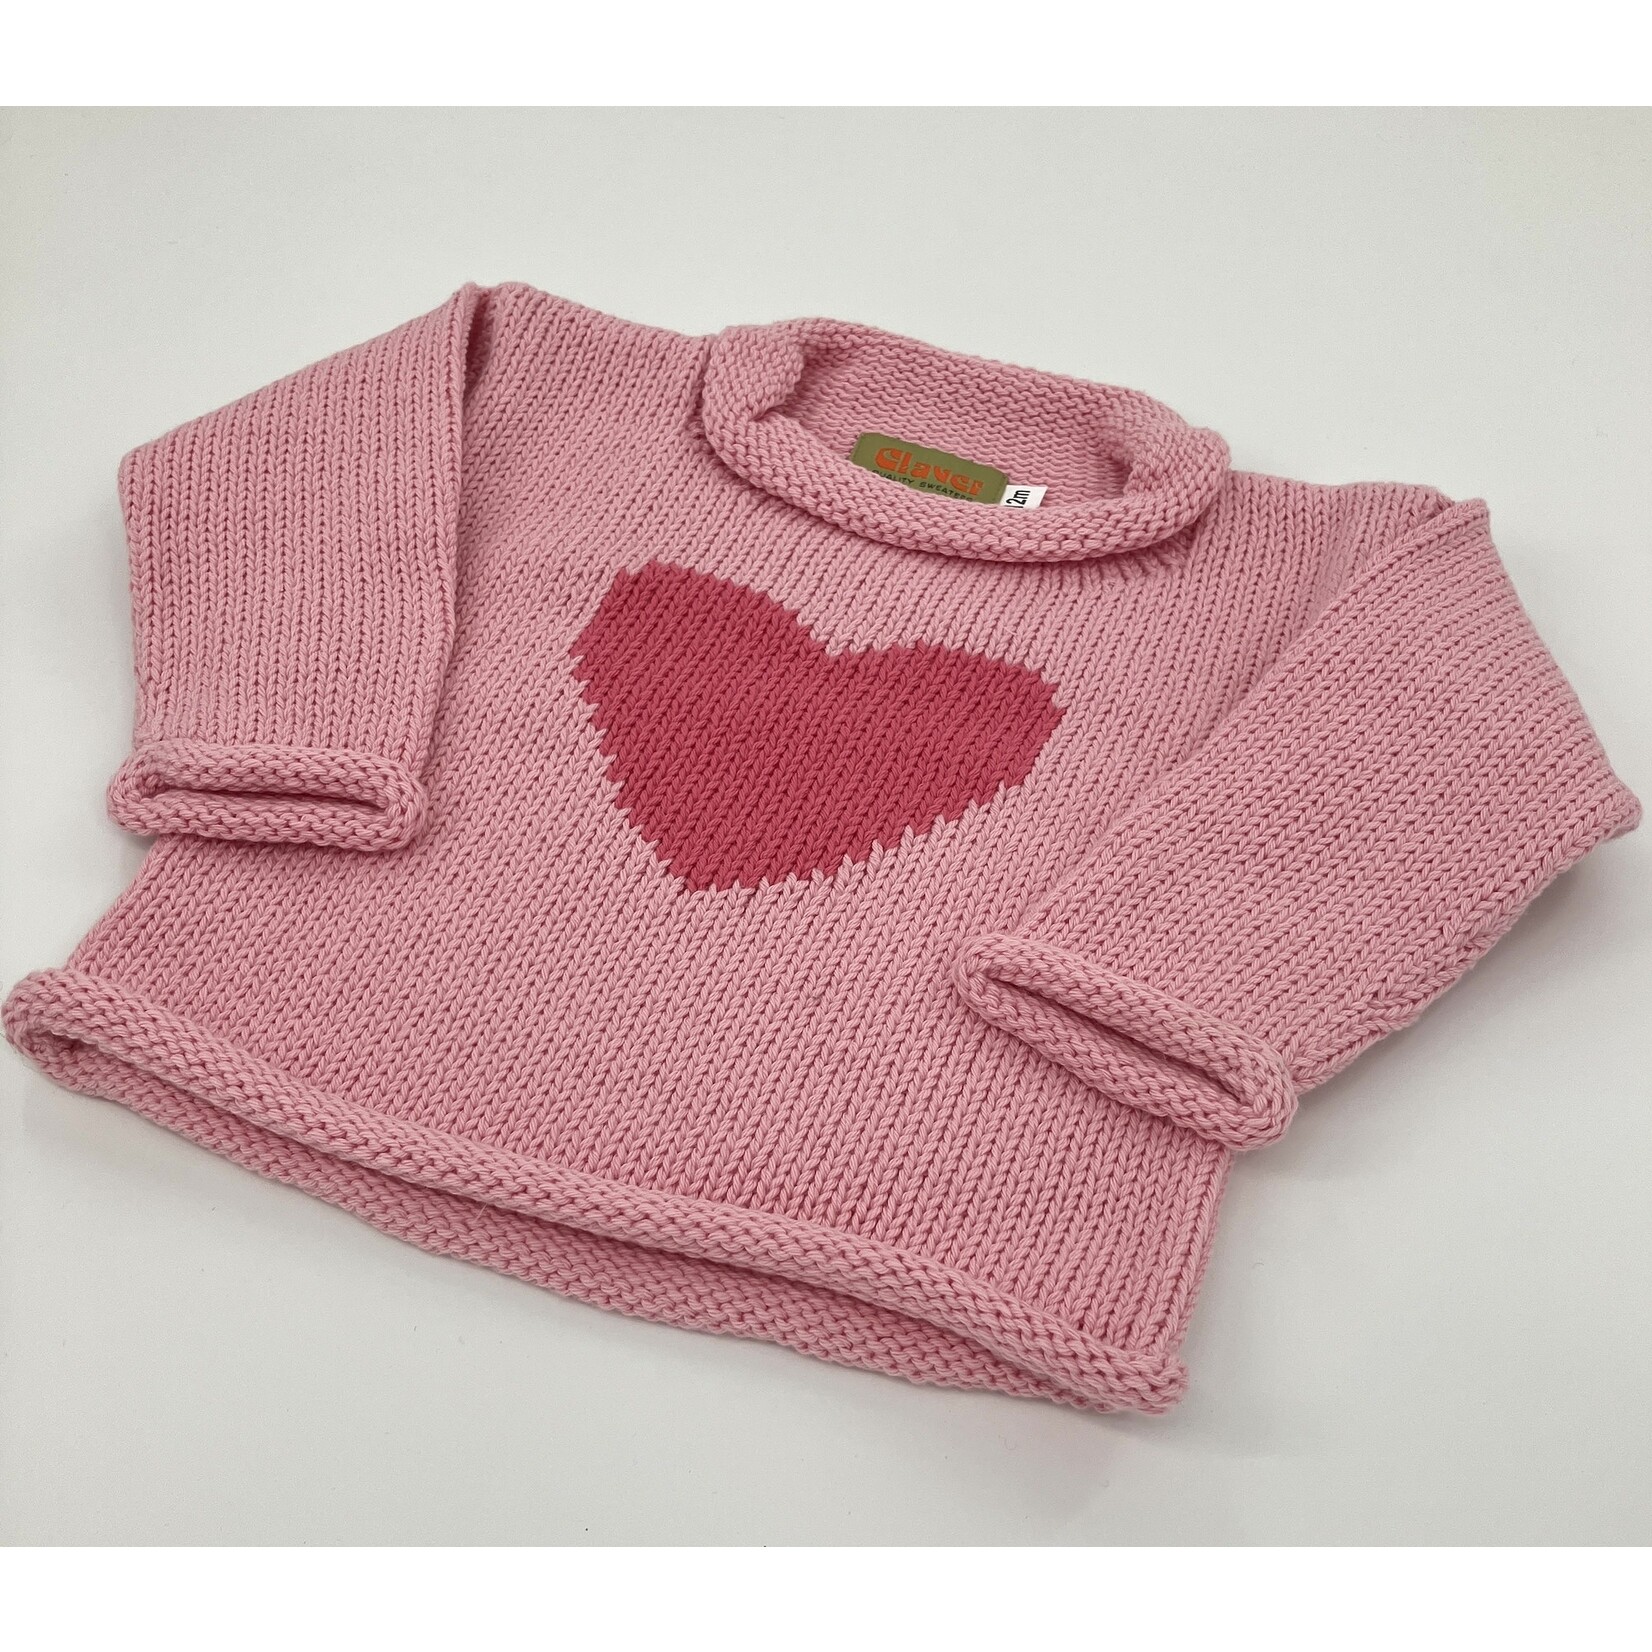 ACVISA/CLAVER Pink Heart Sweater